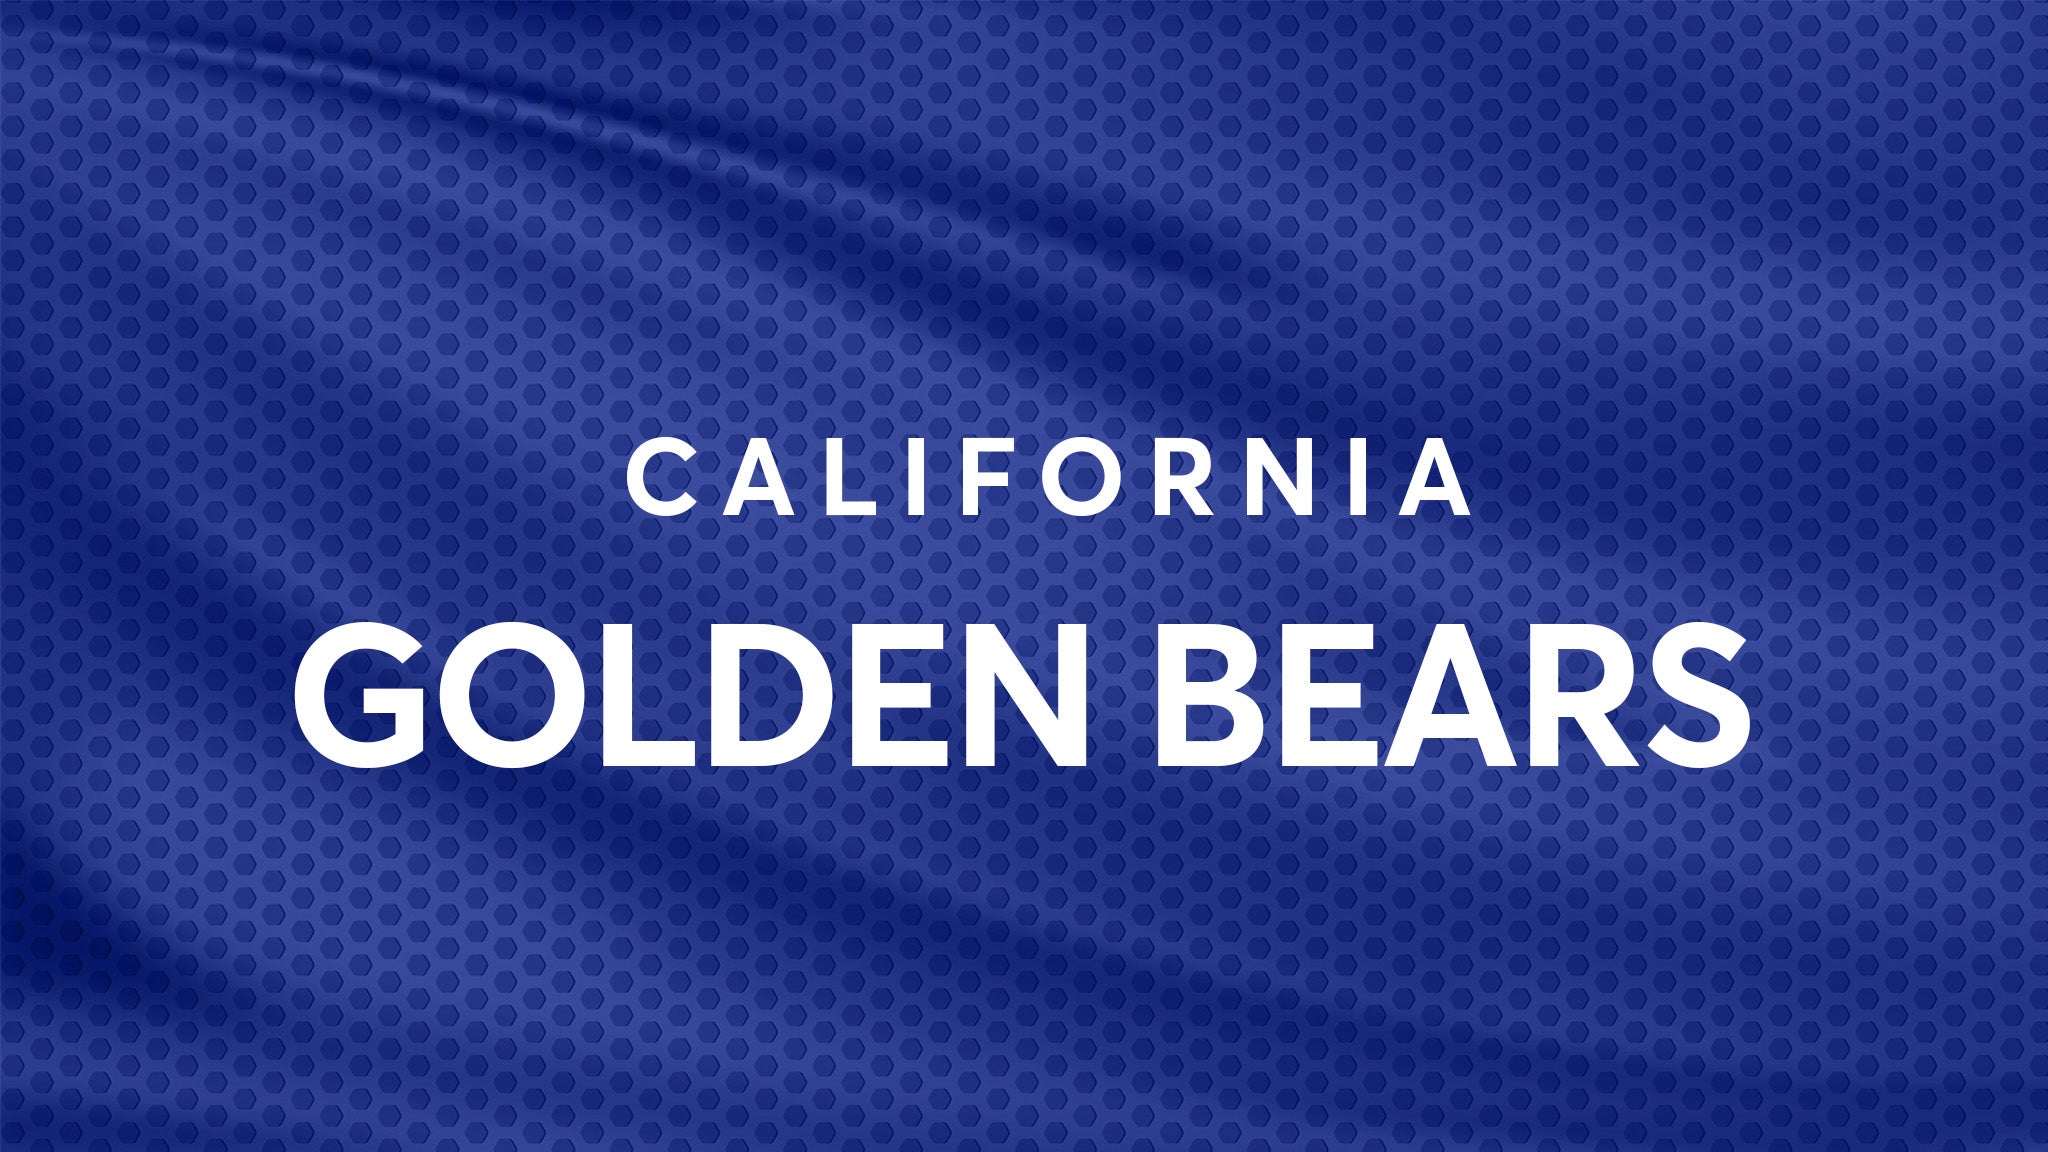 California Golden Bears Football vs. Syracuse University Football